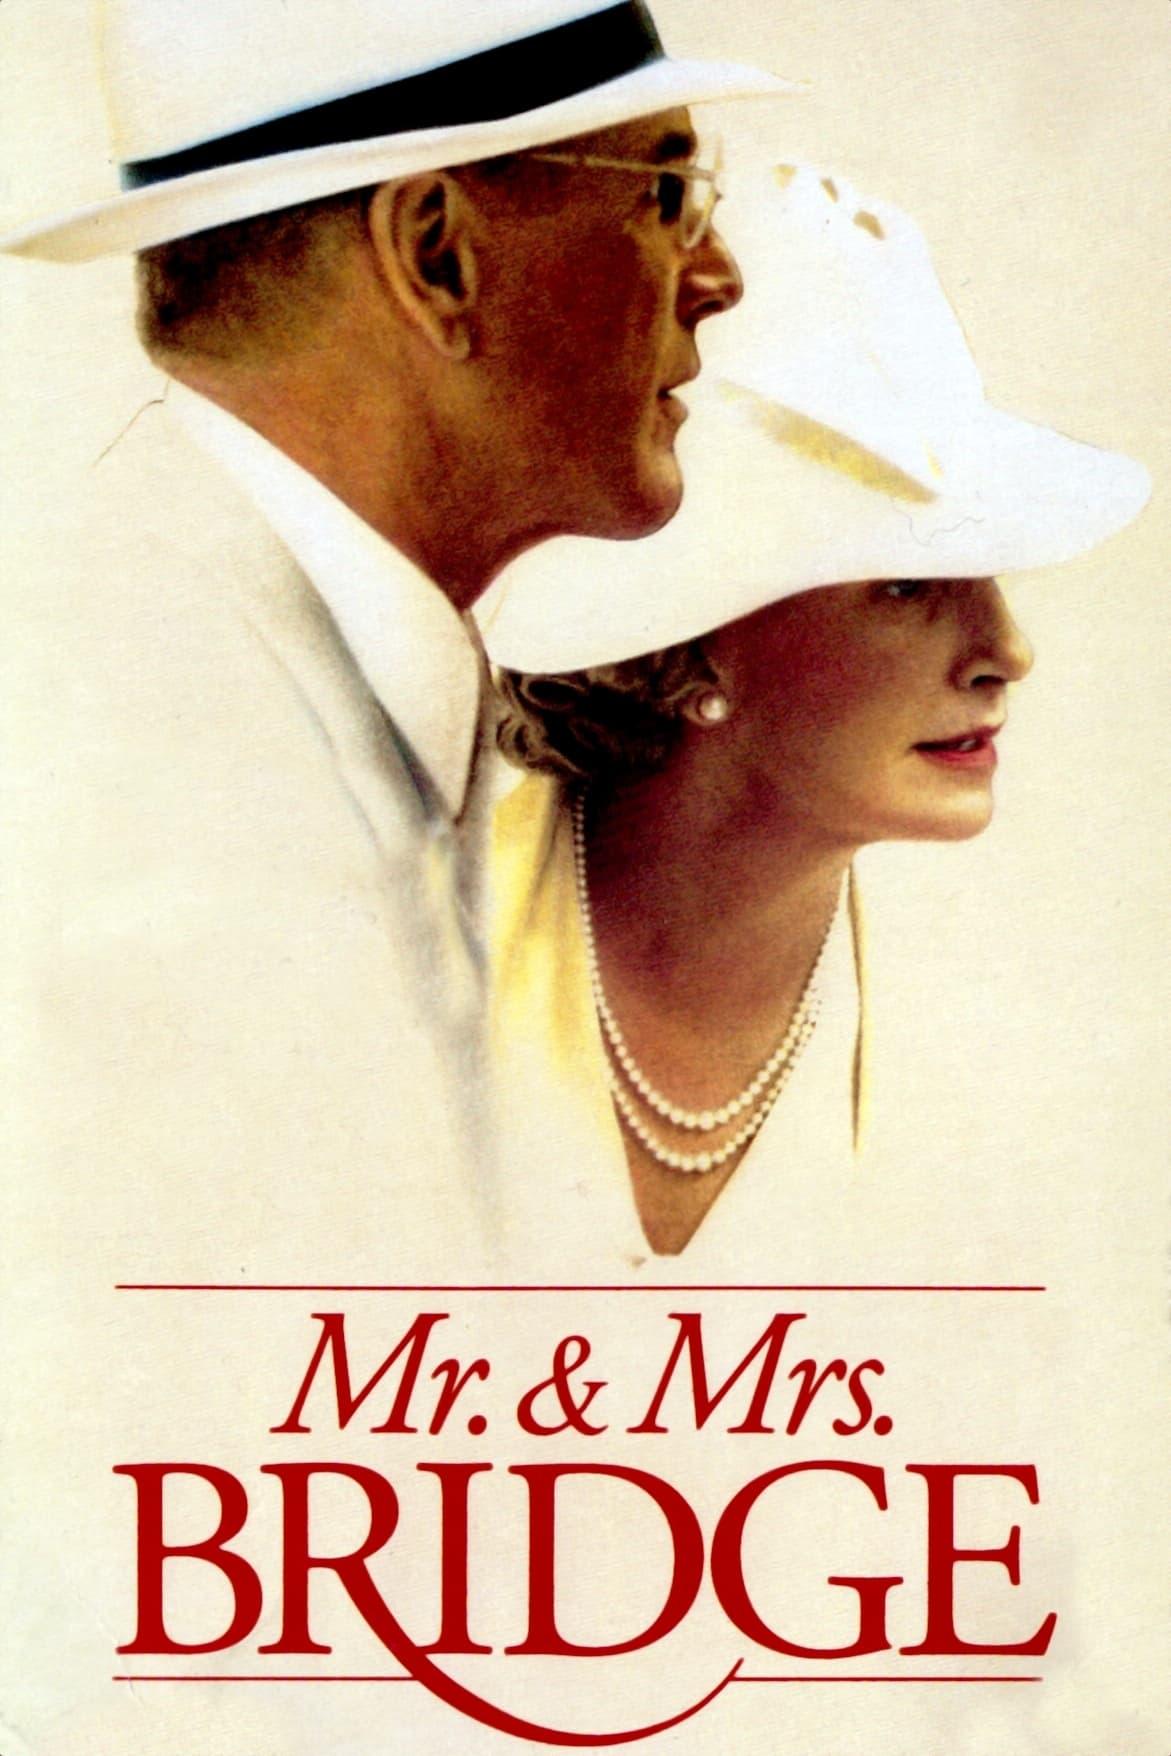 Mr. & Mrs. Bridge poster